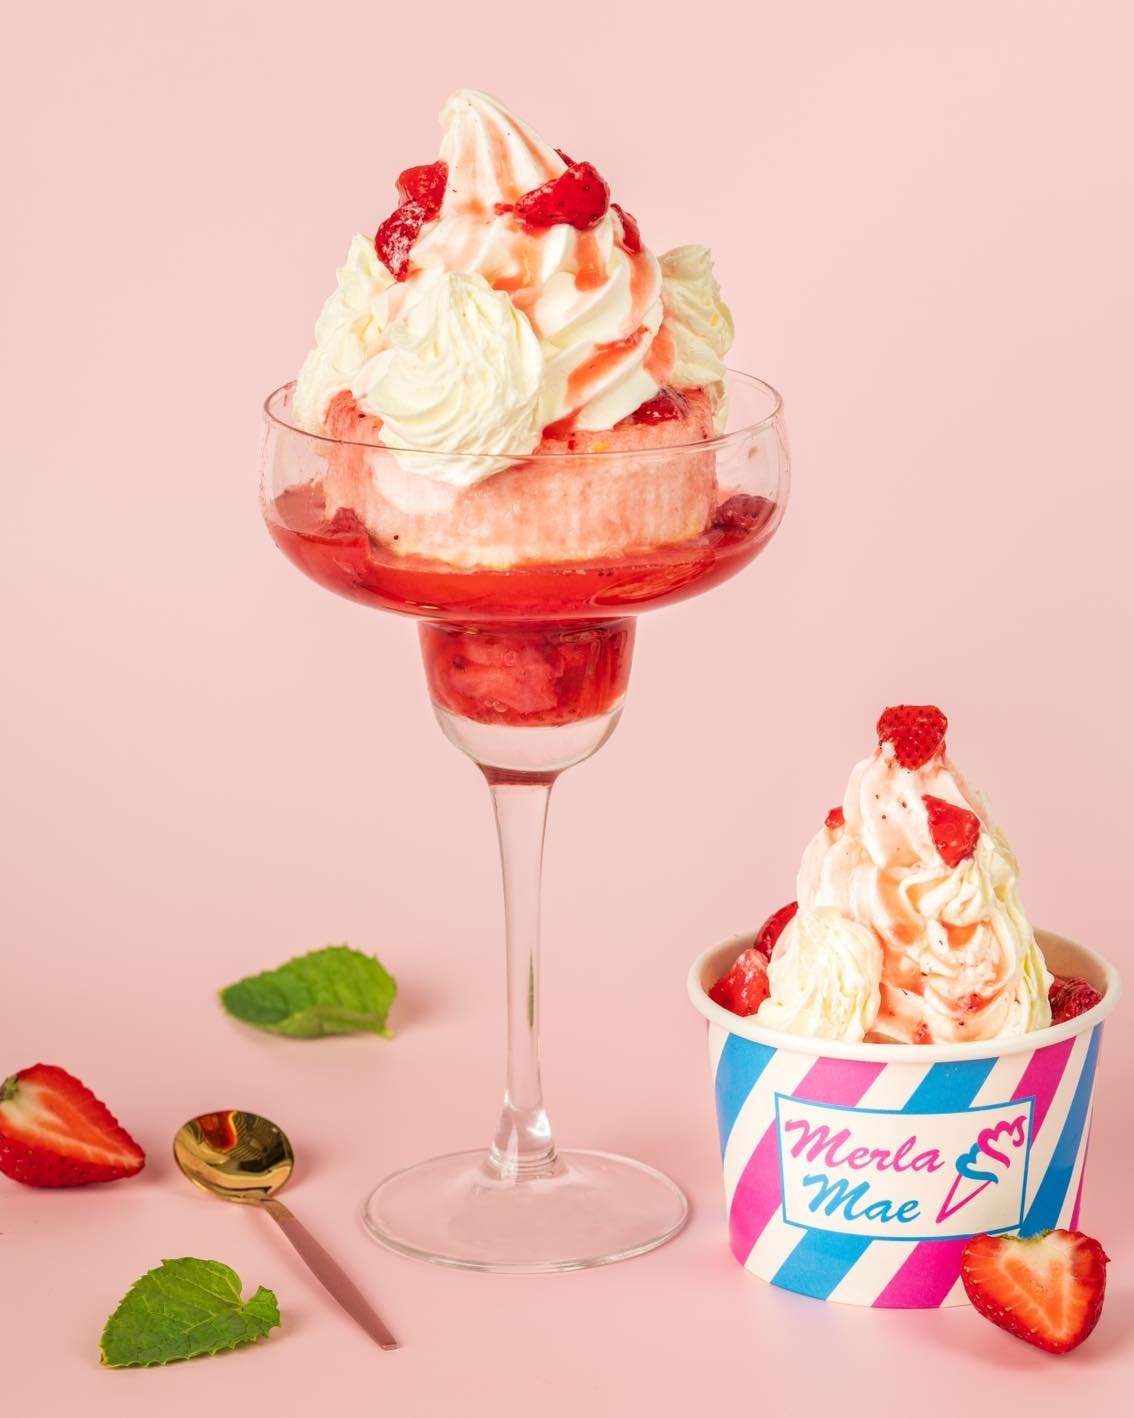 Strawberry shortcake ice cream sundae 🍨🍓
Simple &amp; delicious 👌

#londonontario #yummy #ldnont #merlamaeicecream #ldn #ldnontario #merlamae #icecreamlover #instagood #tasty #yummyfood #icecreamtime #softserve #vanillaicecream #softserveicecream 